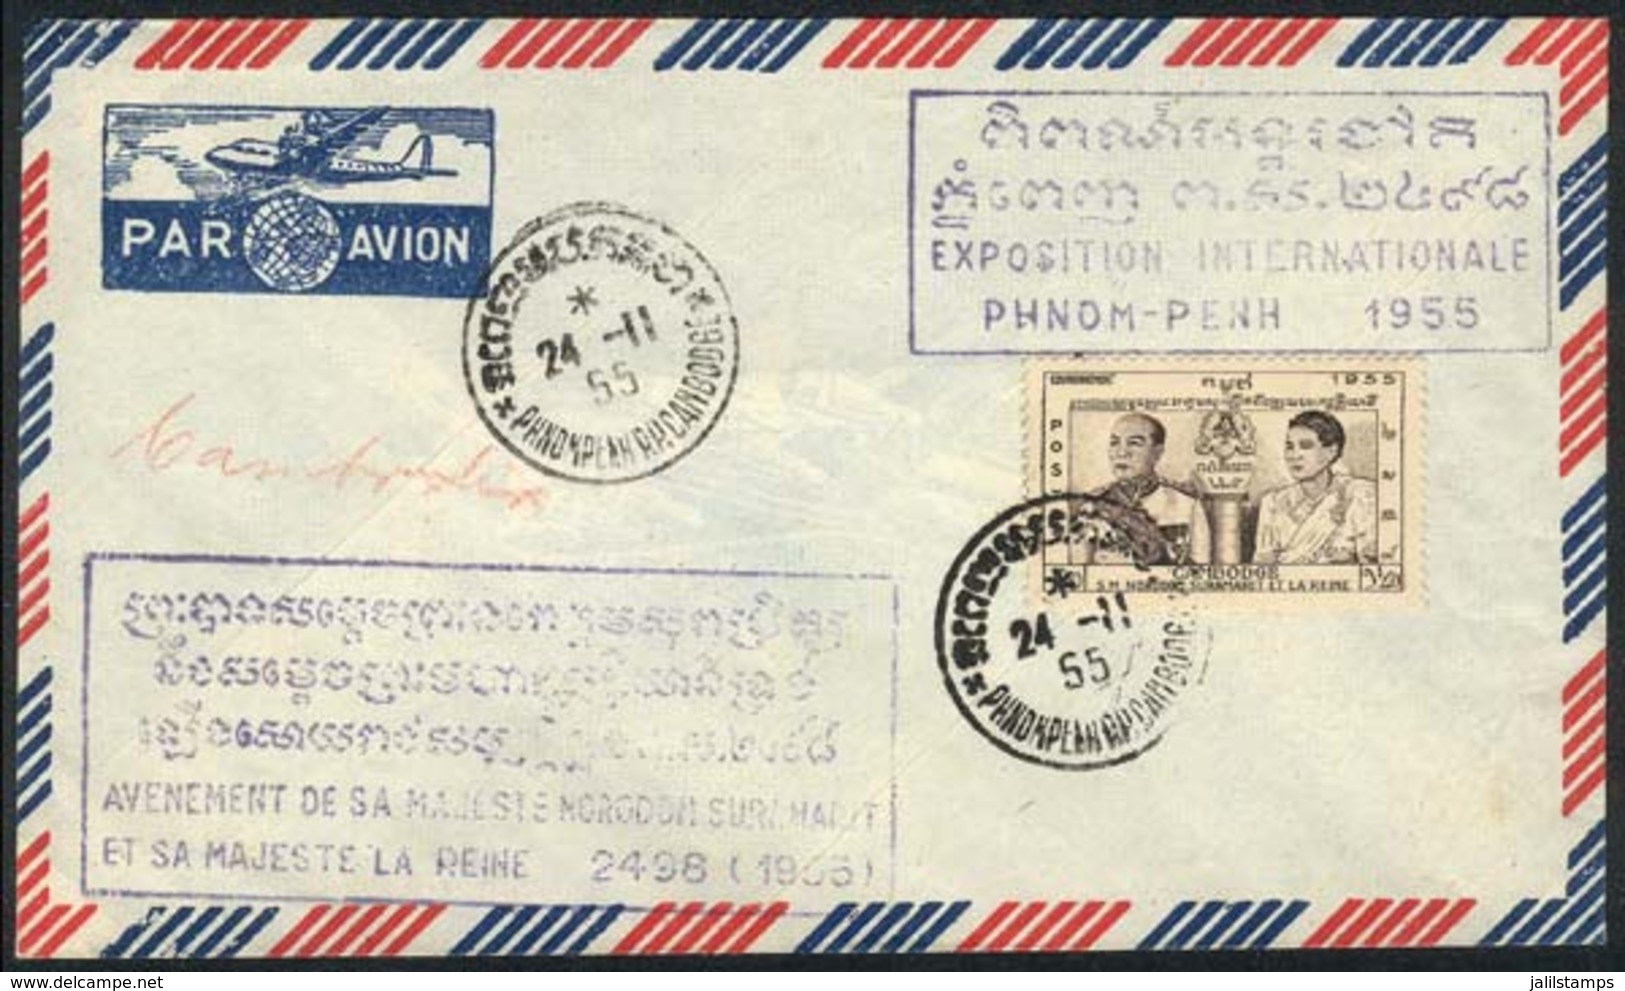 CAMBODIA: Cover With Commemorative Cachet Of The Phnom-Penh Intl. Philatelic Expo, 24/NO/1955, VF! - Cambodja